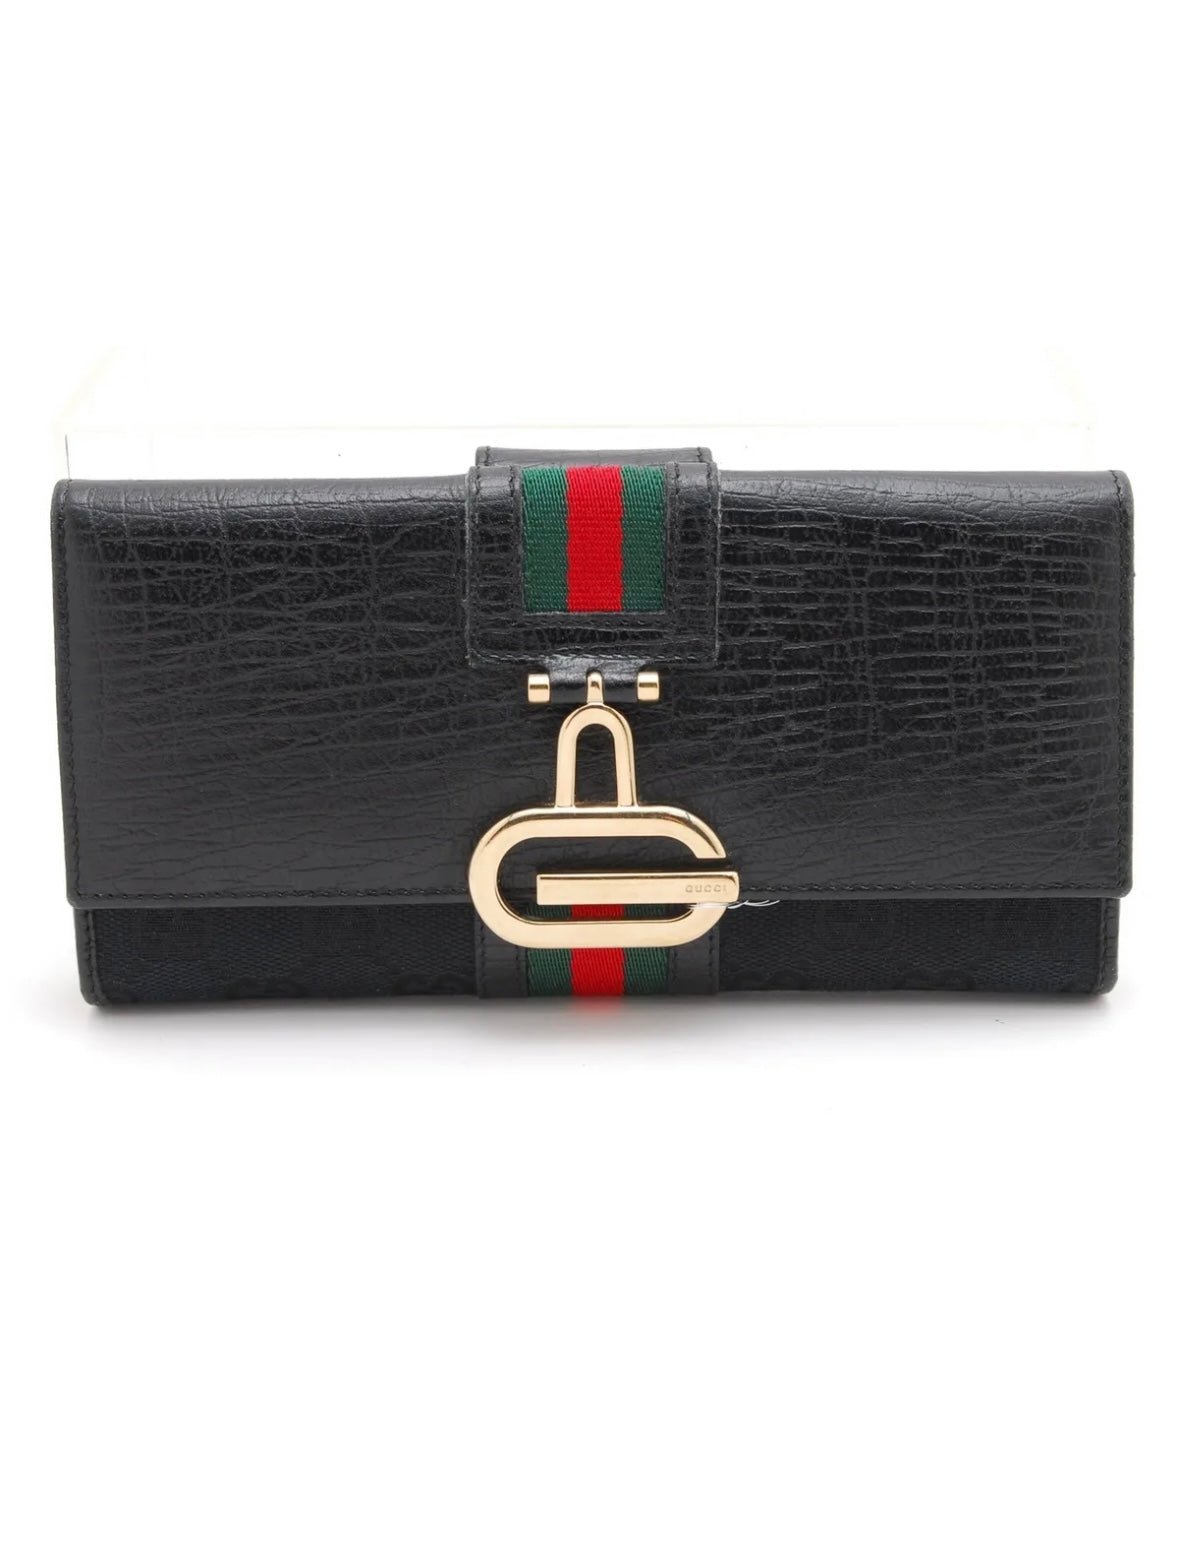 Mens Gucci Wallet Monogram Snake Bi-Fold GG Wallet Authentic for